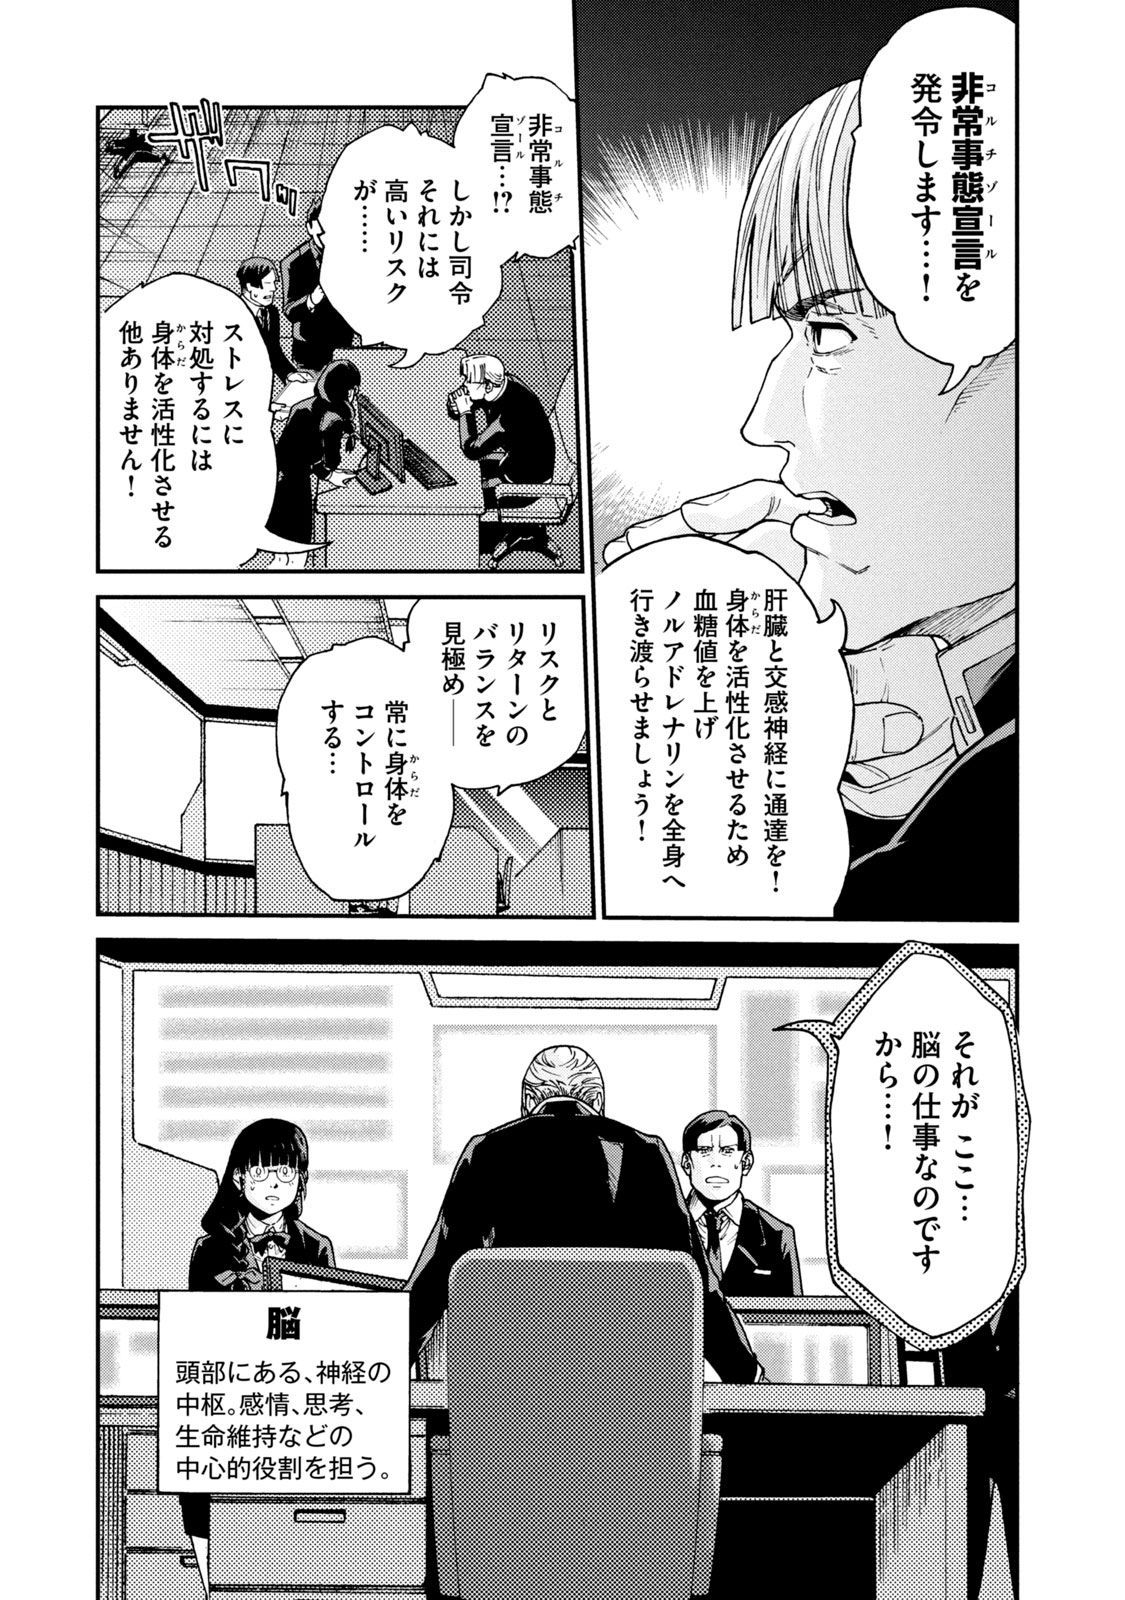 Hataraku Saibou BLACK - Chapter 33 - Page 3